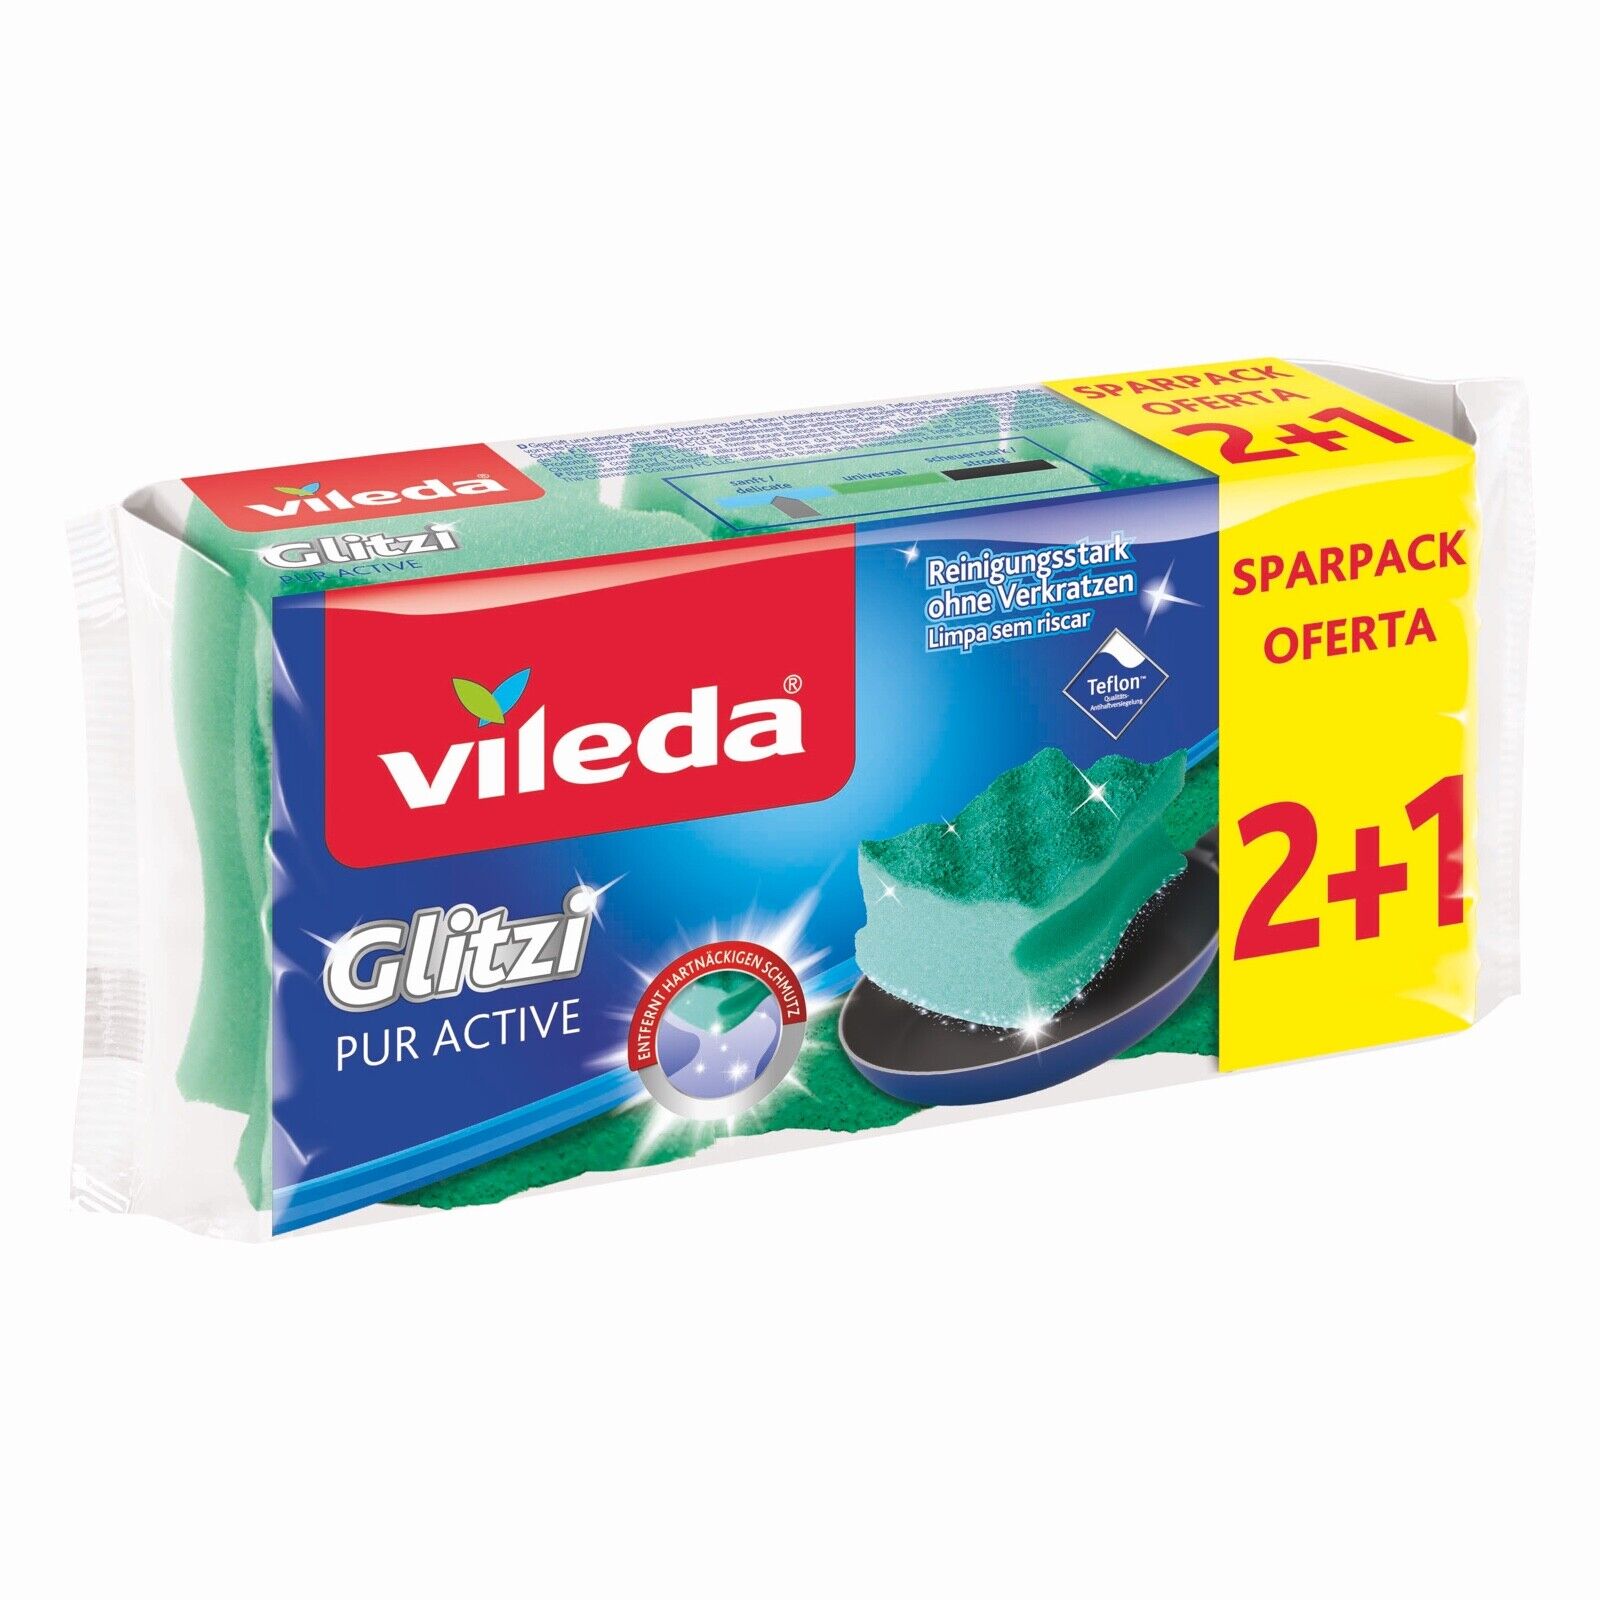 Vileda® Glitzi pur active Topf-Schwamm 3er Spar-pack